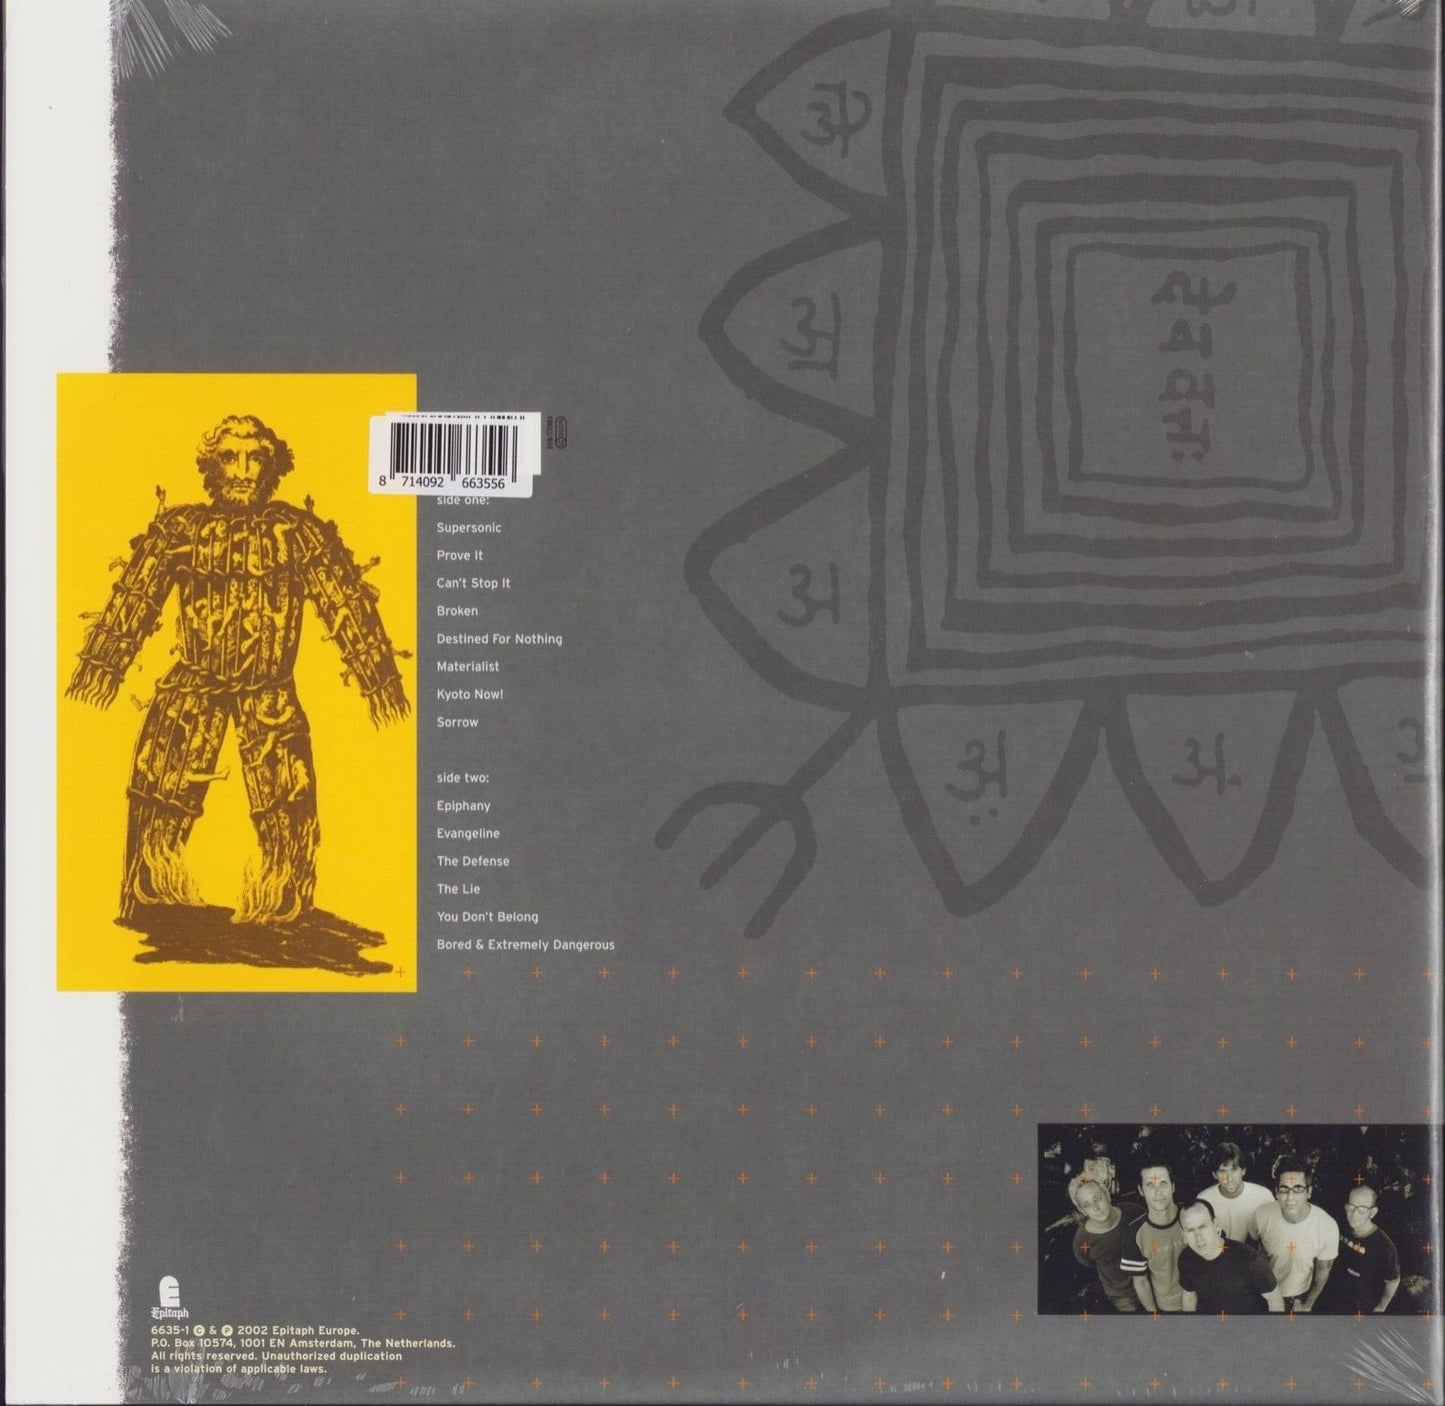 Bad Religion - The Process Of Belief Orange Black Vinyl LP Limited Edition